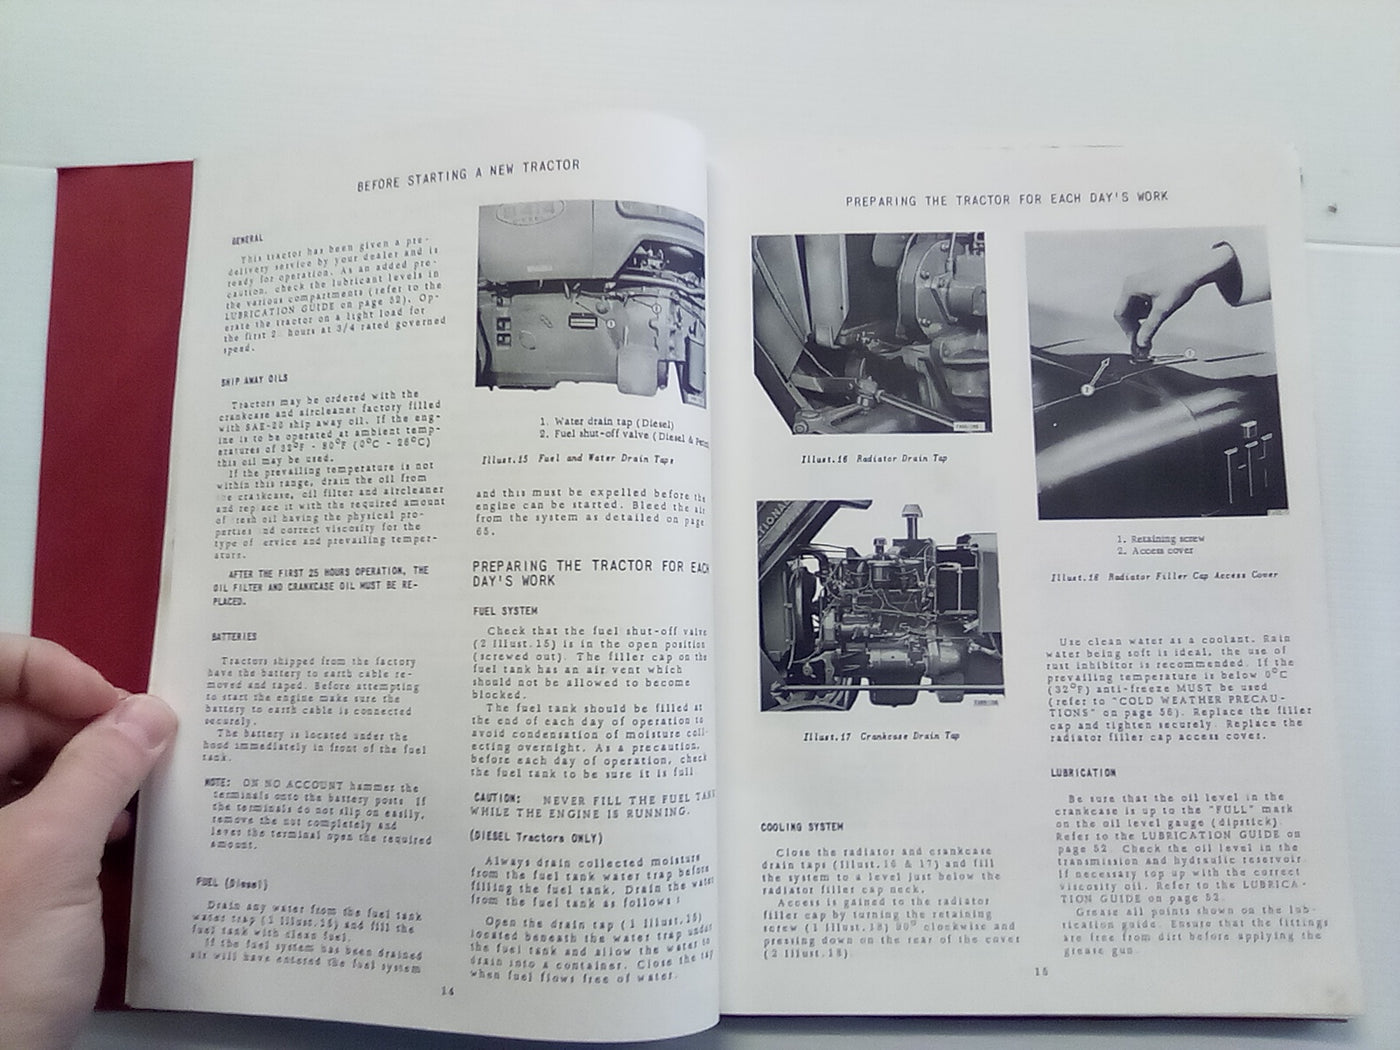 International McCormick B-414 Tractor (Petrol & Diesel) Operators Manual